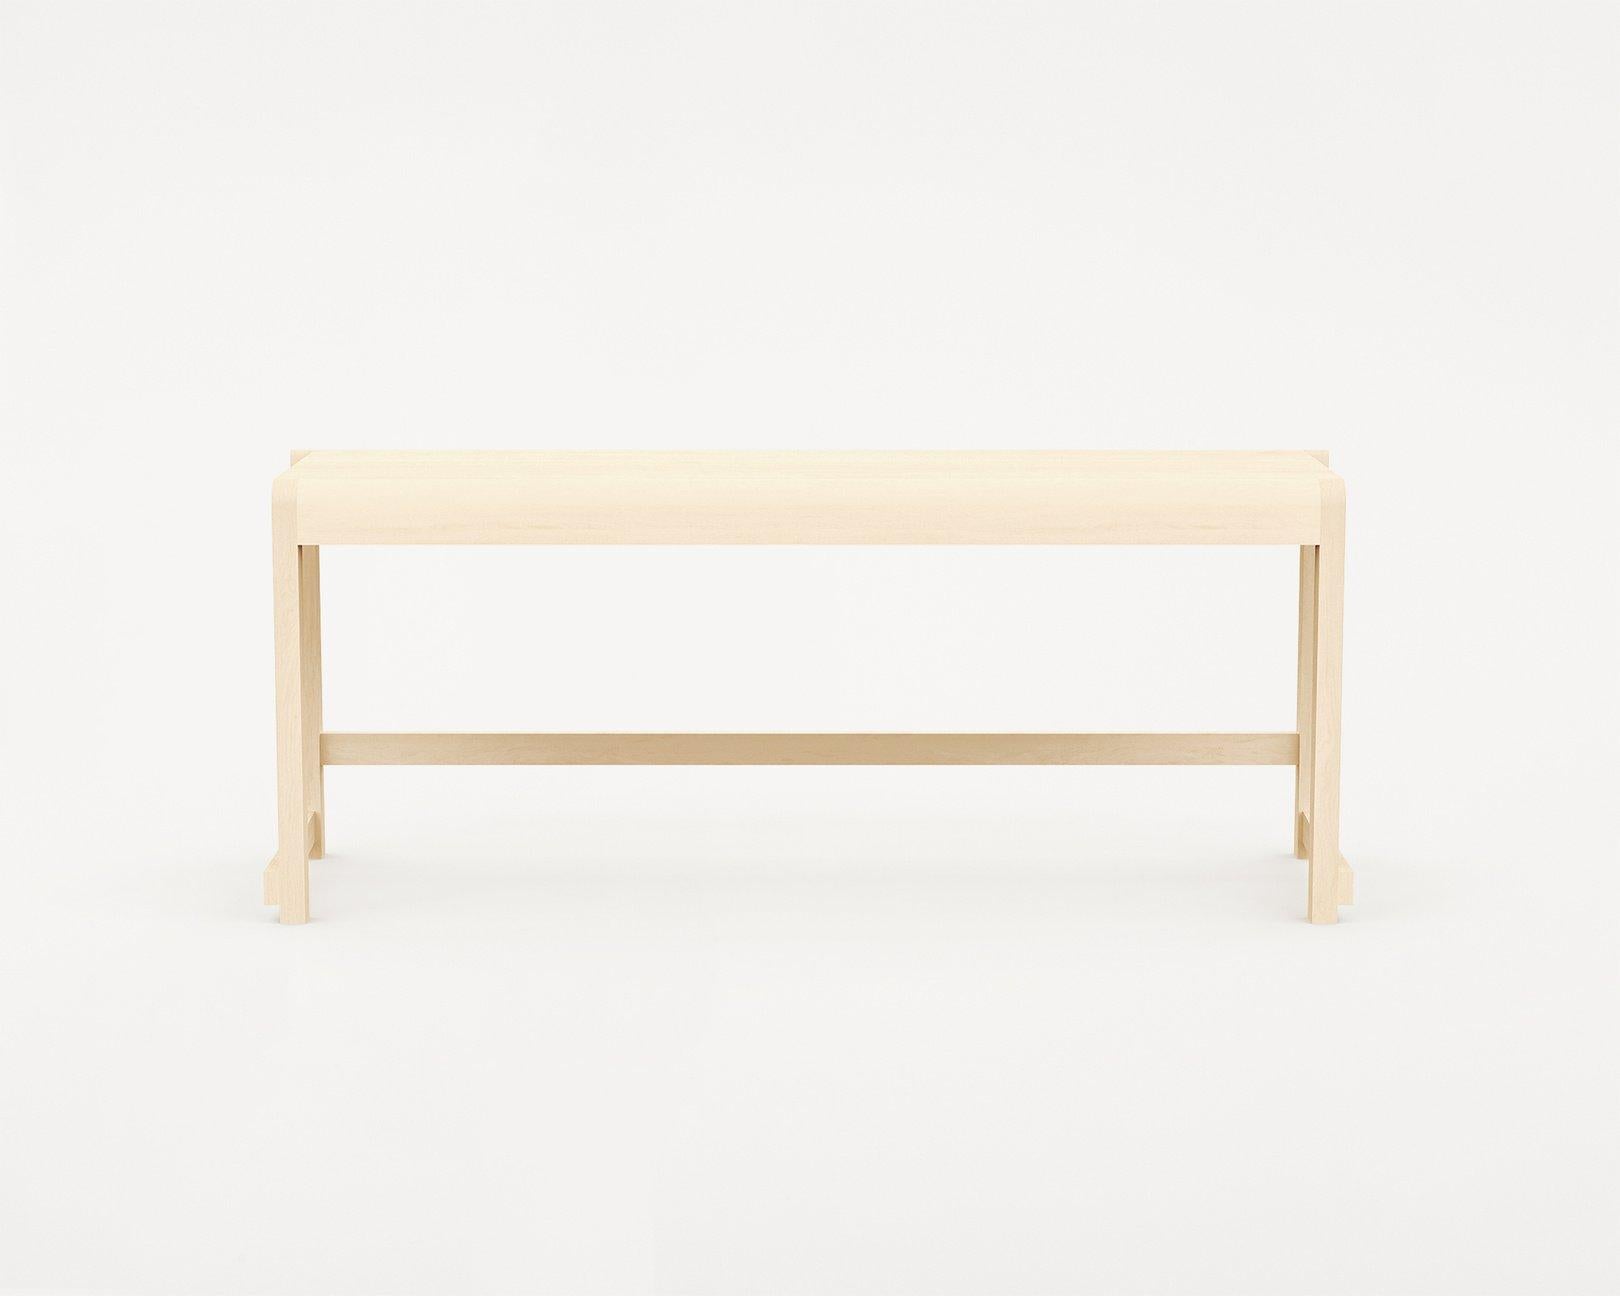 Danish Minimal Scandinavian Design Bench 01 in Natural Wood For Sale